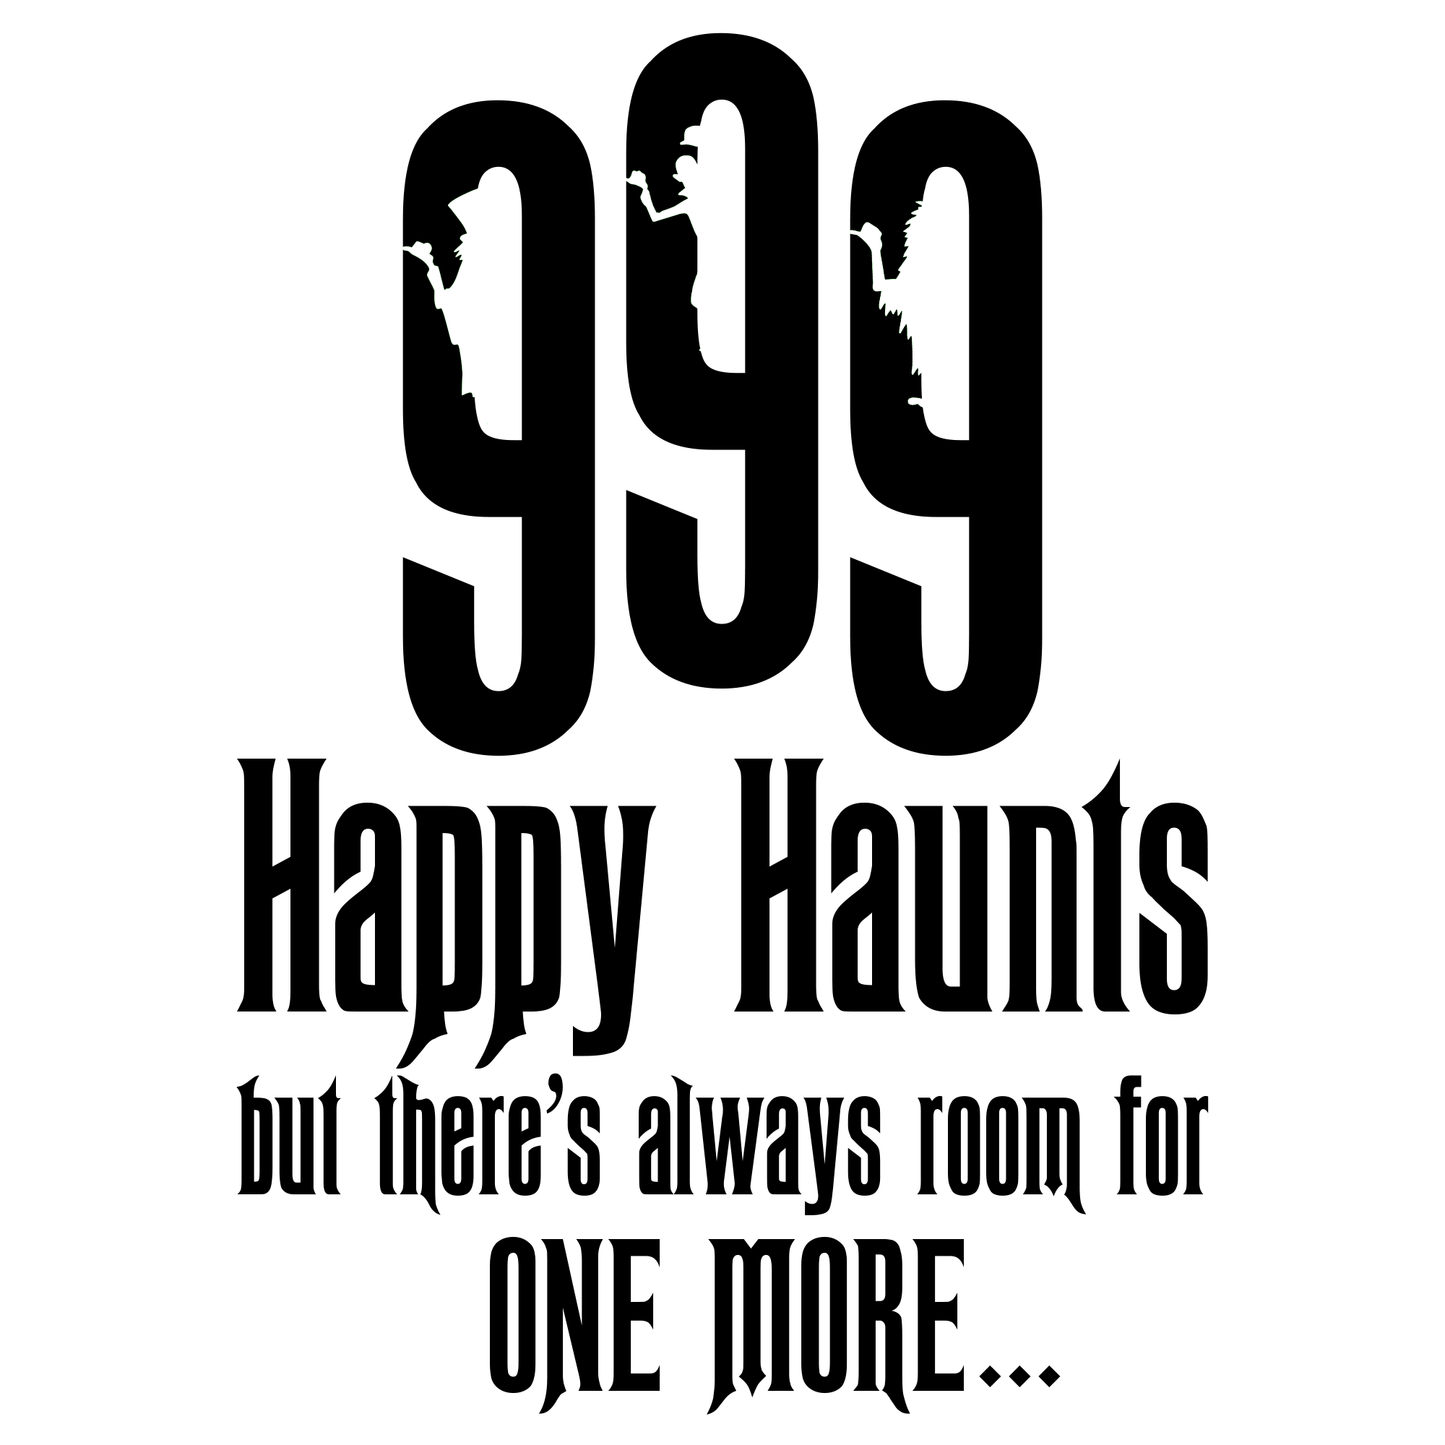 999 Happy Haunts Disney Haunted Mansion Vinyl Decal Sticker